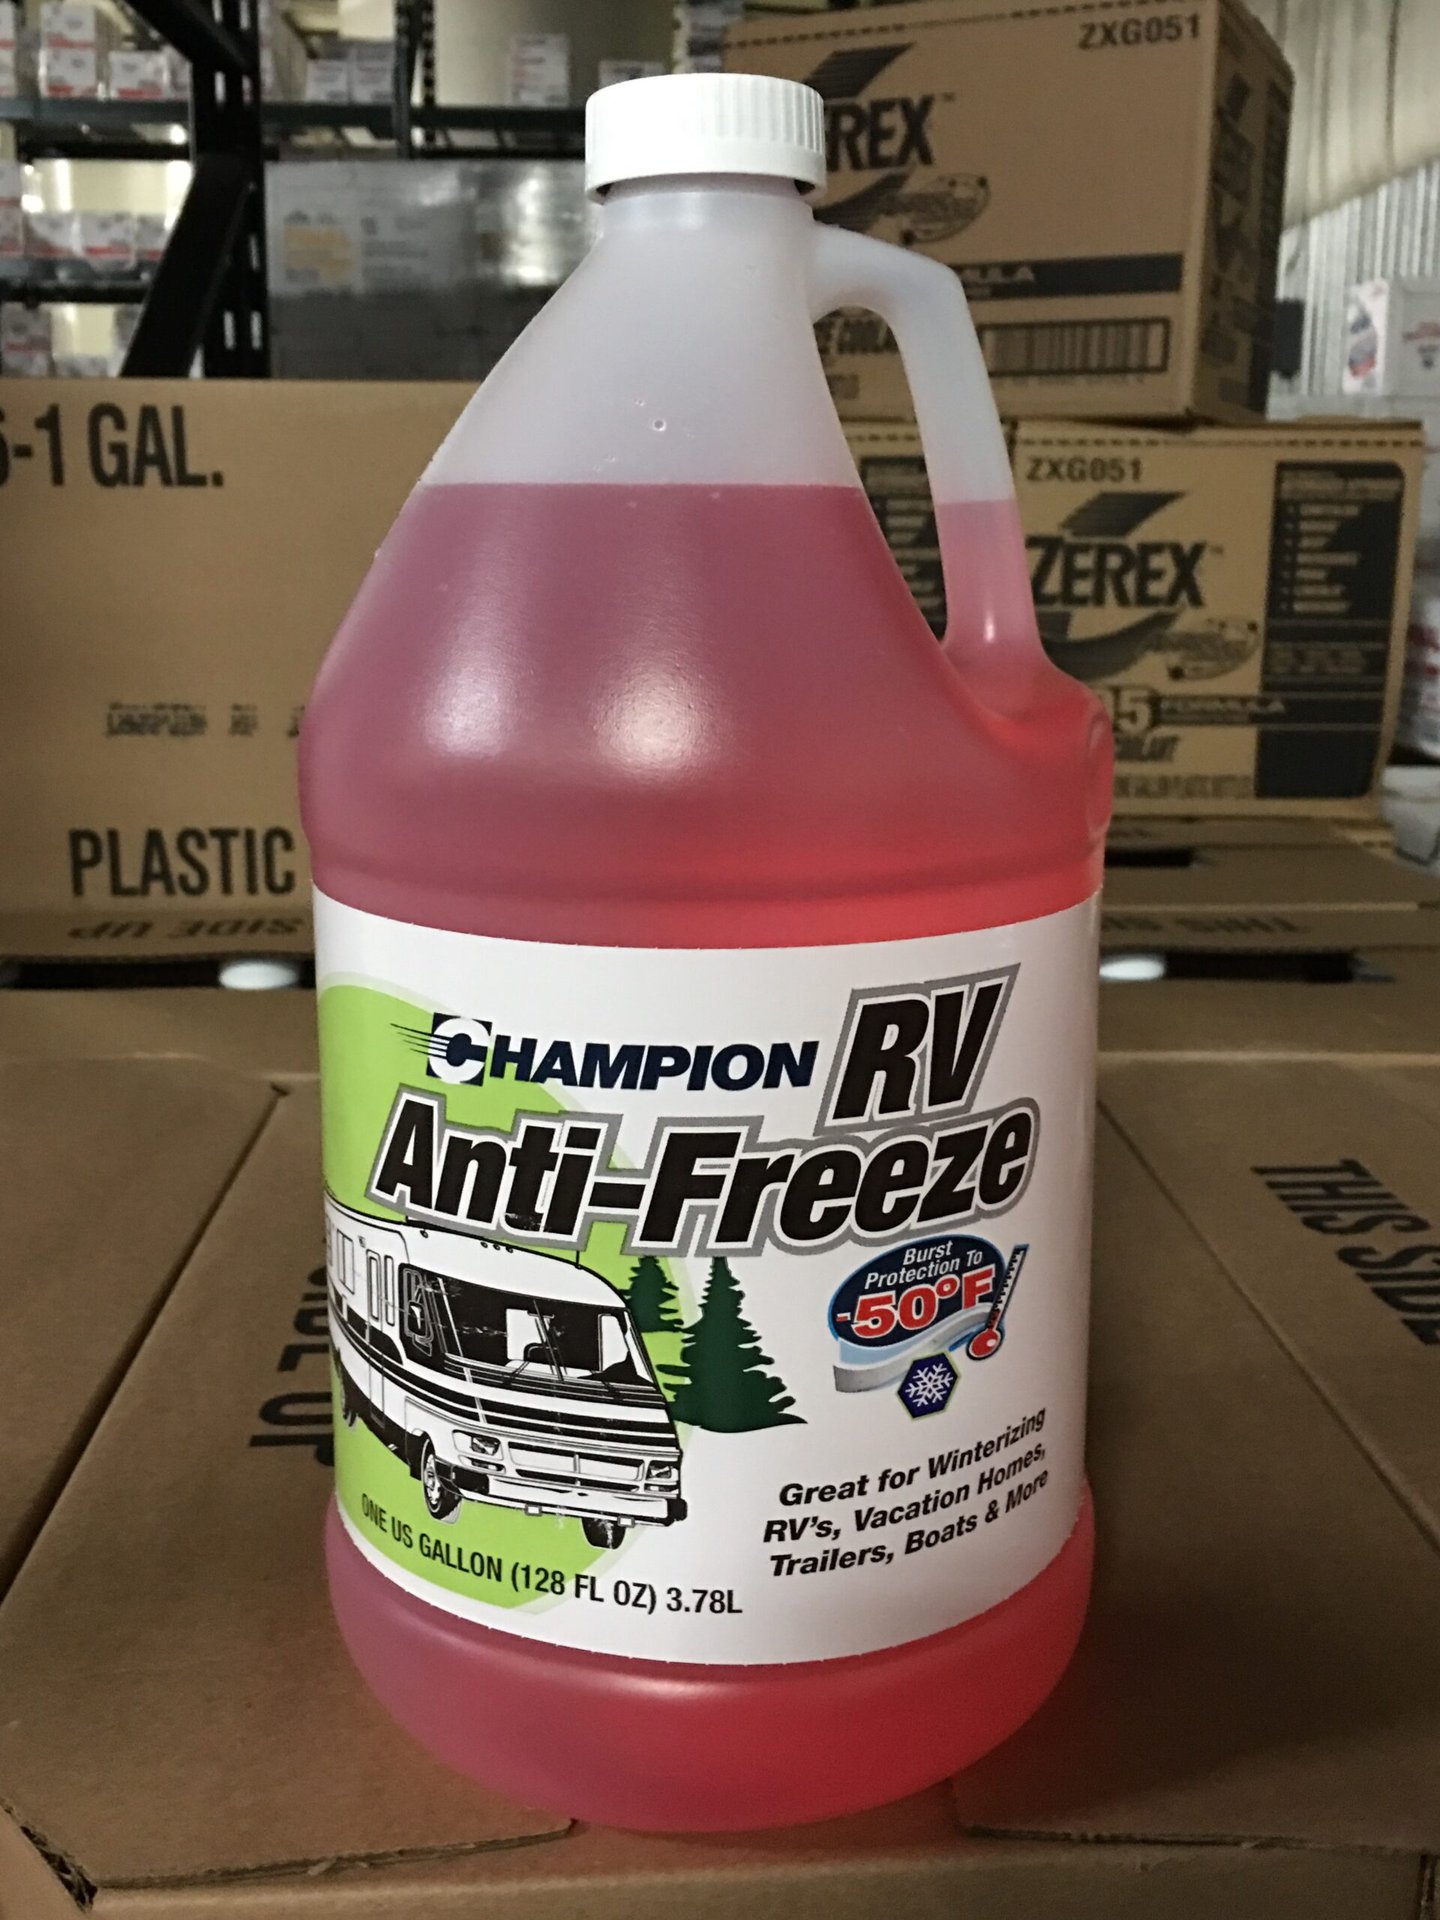 Champion RV Antifreeze - 6/1 Gallons Case.